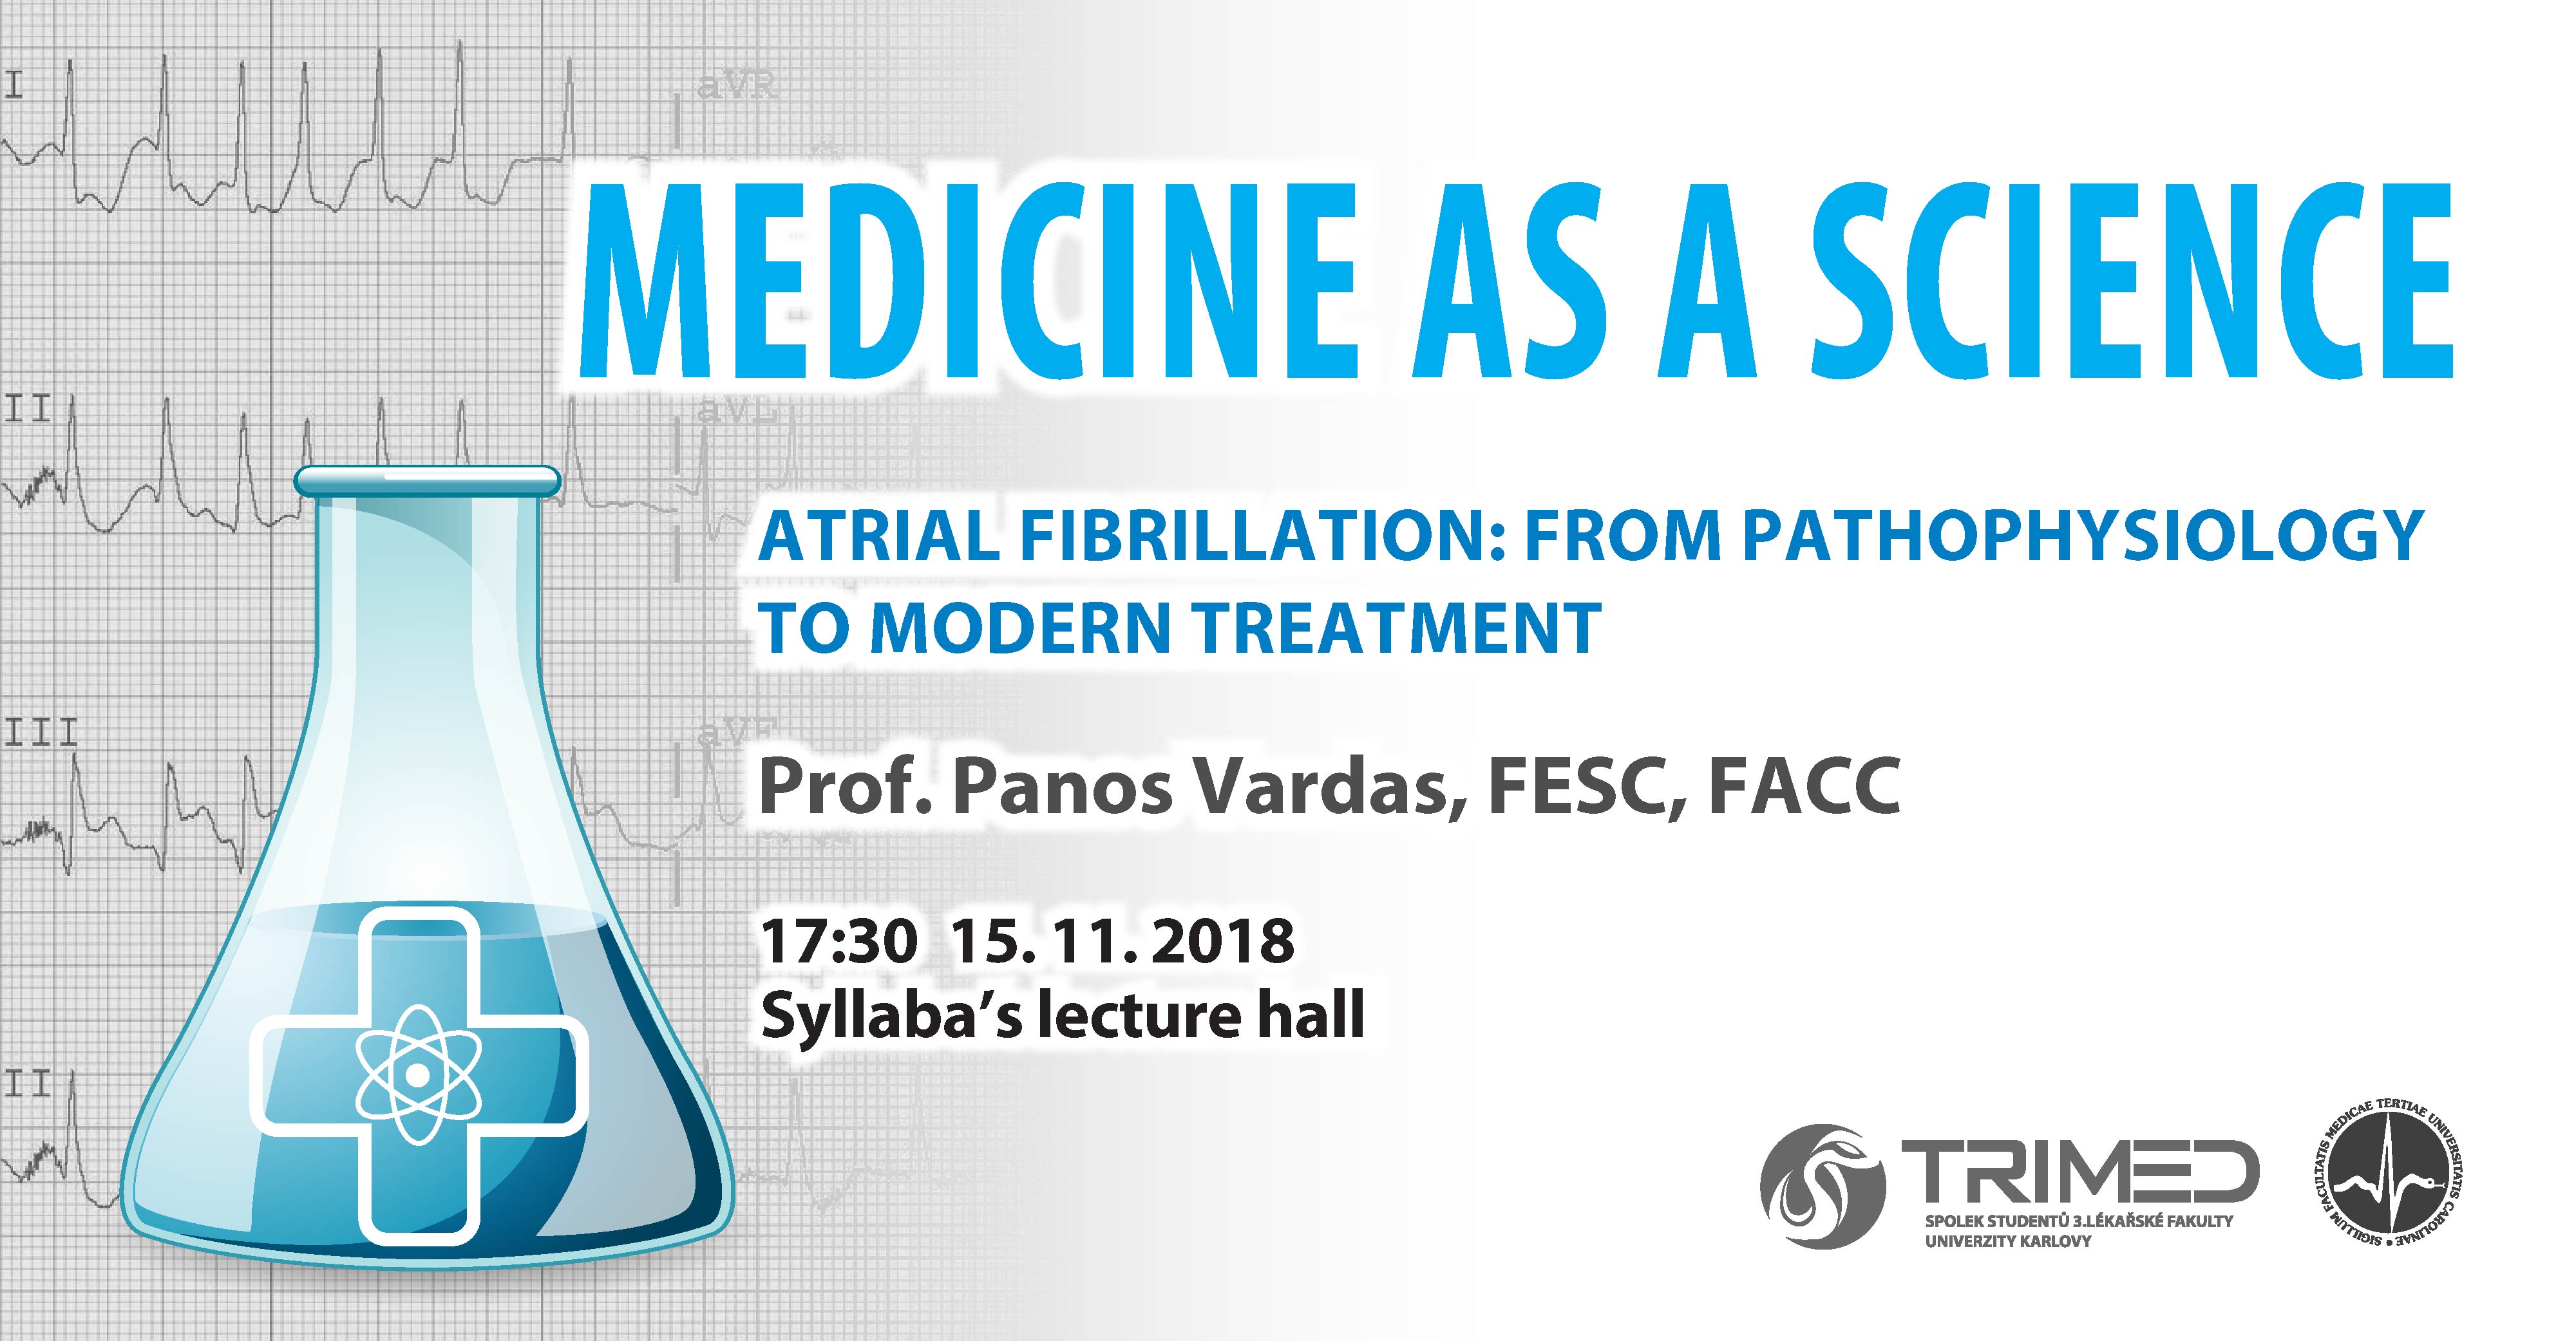 Atrial fibrillation: from pathophysiology to modern treatment